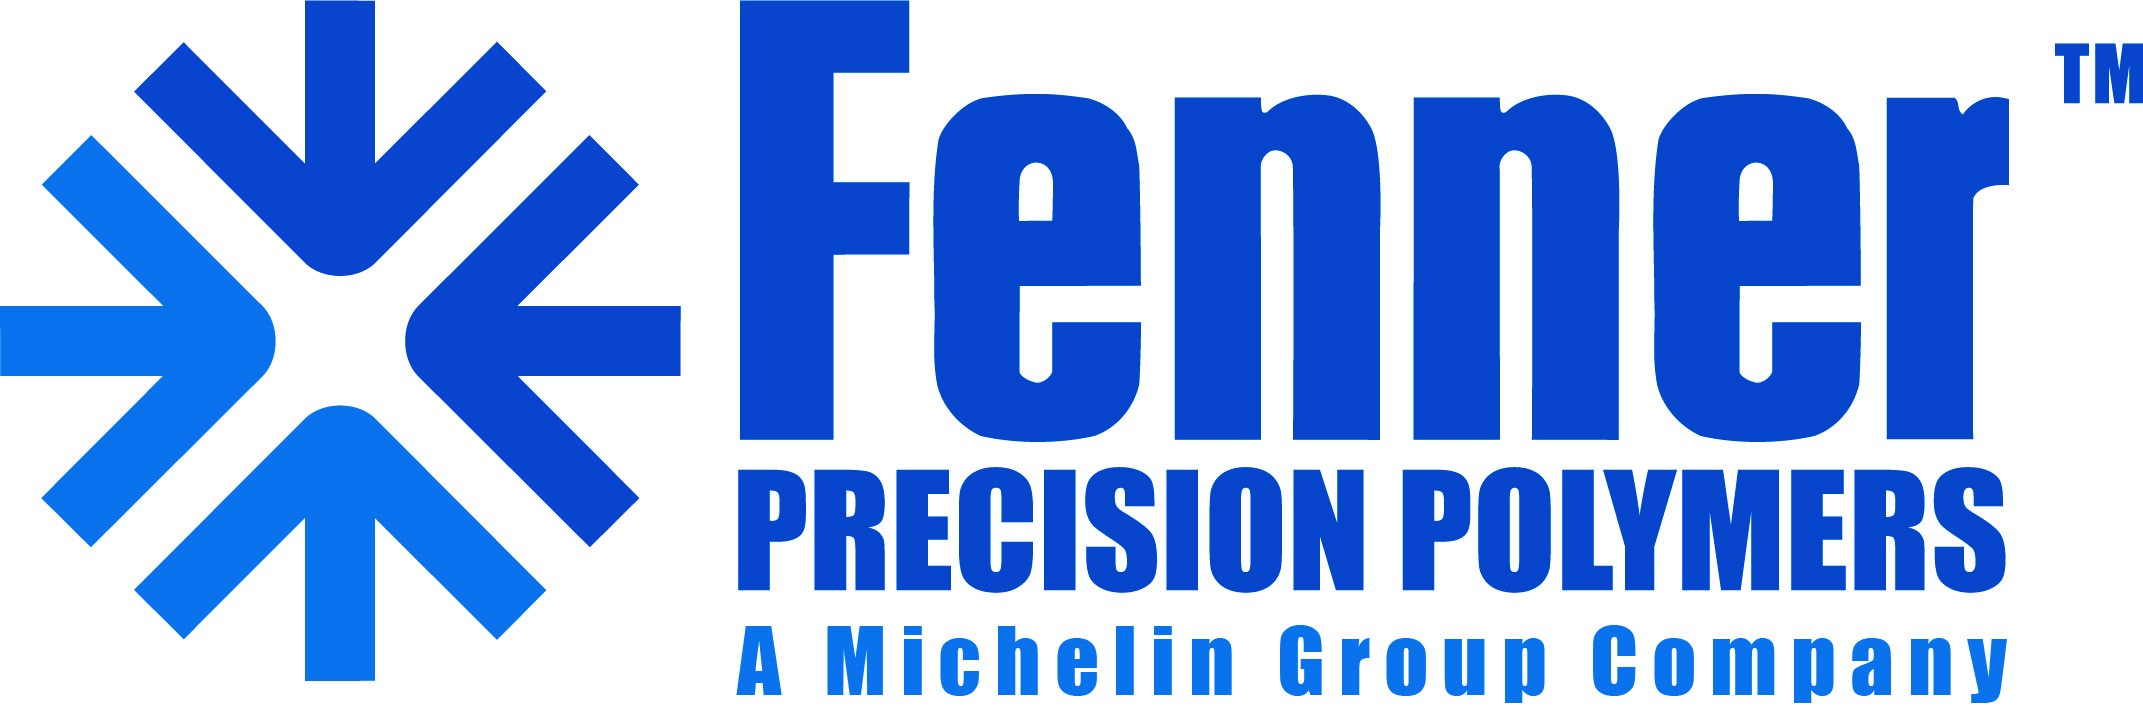 Fenner Precision Polymers logo